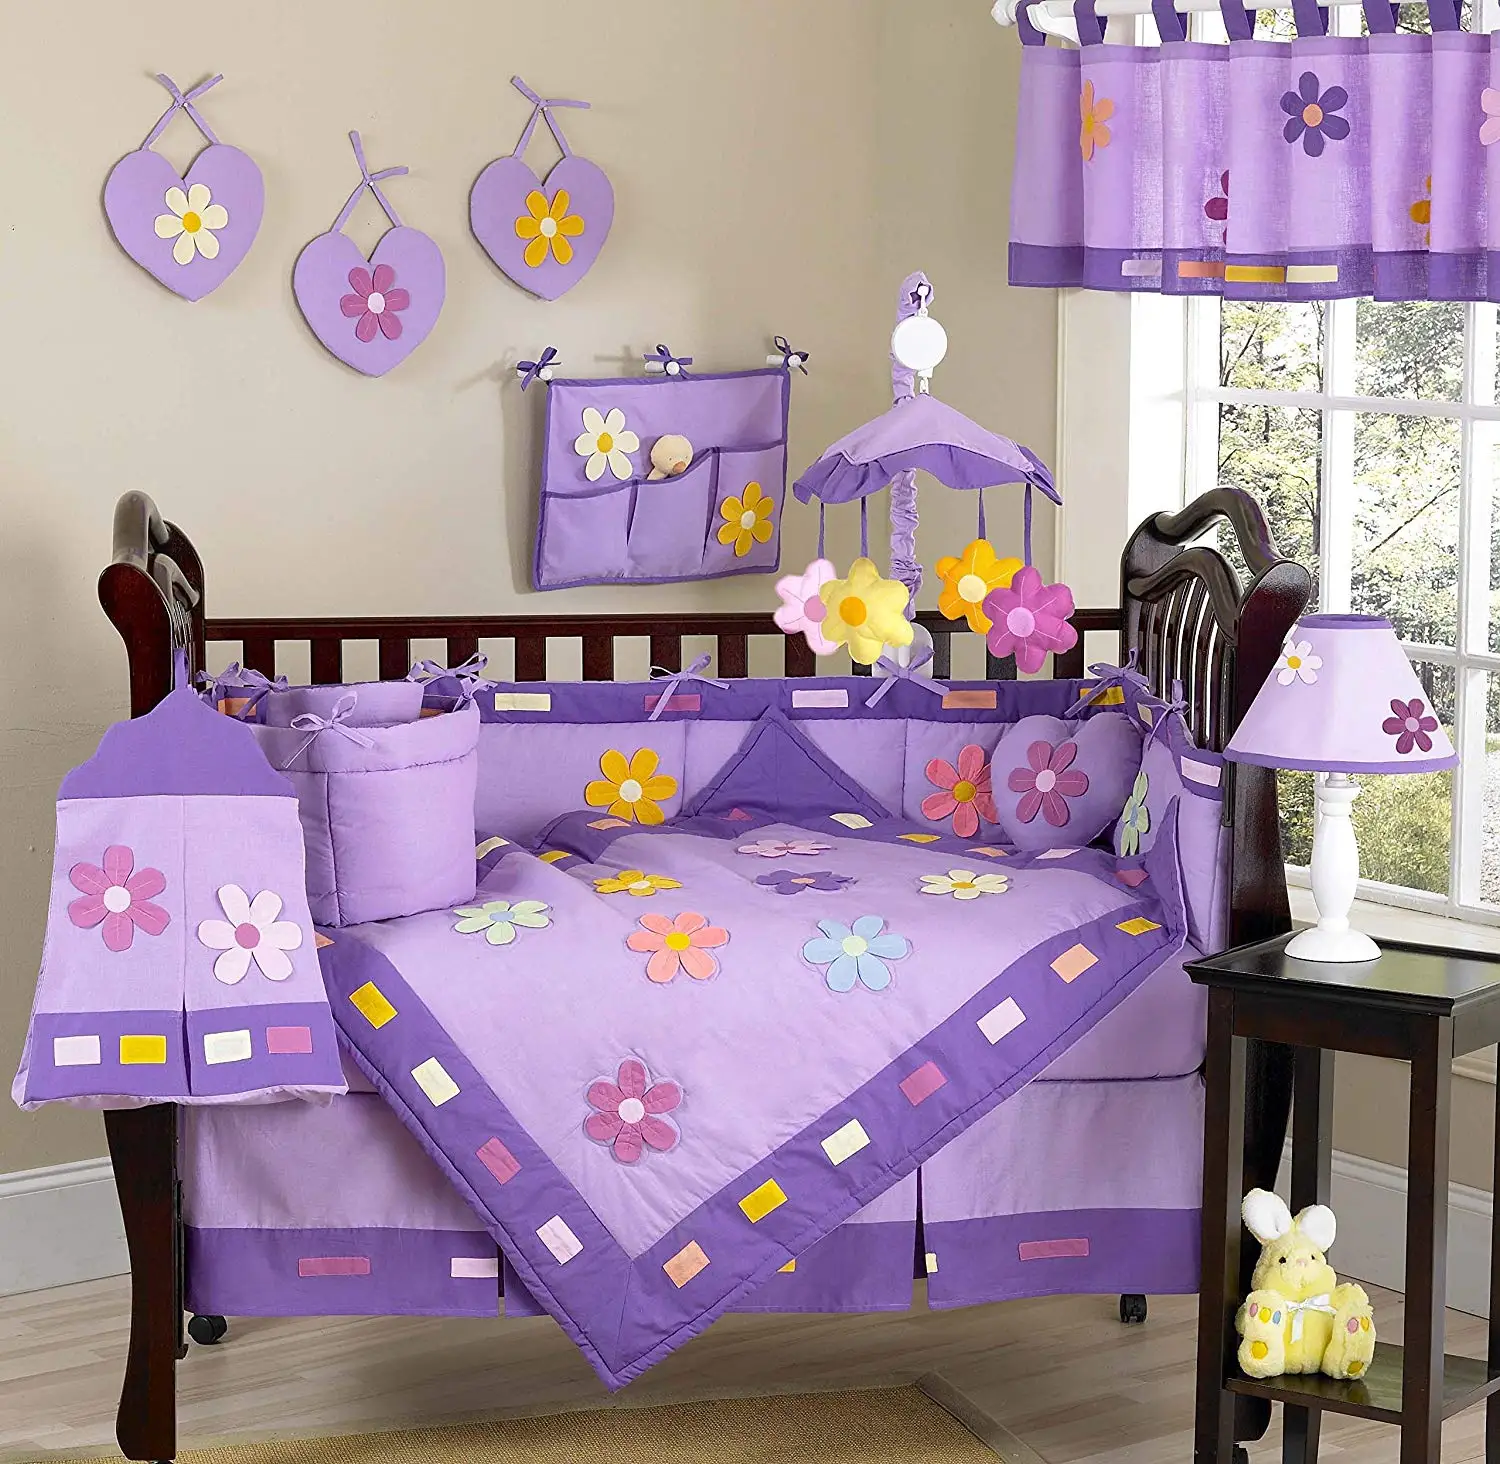 purple cot bedding